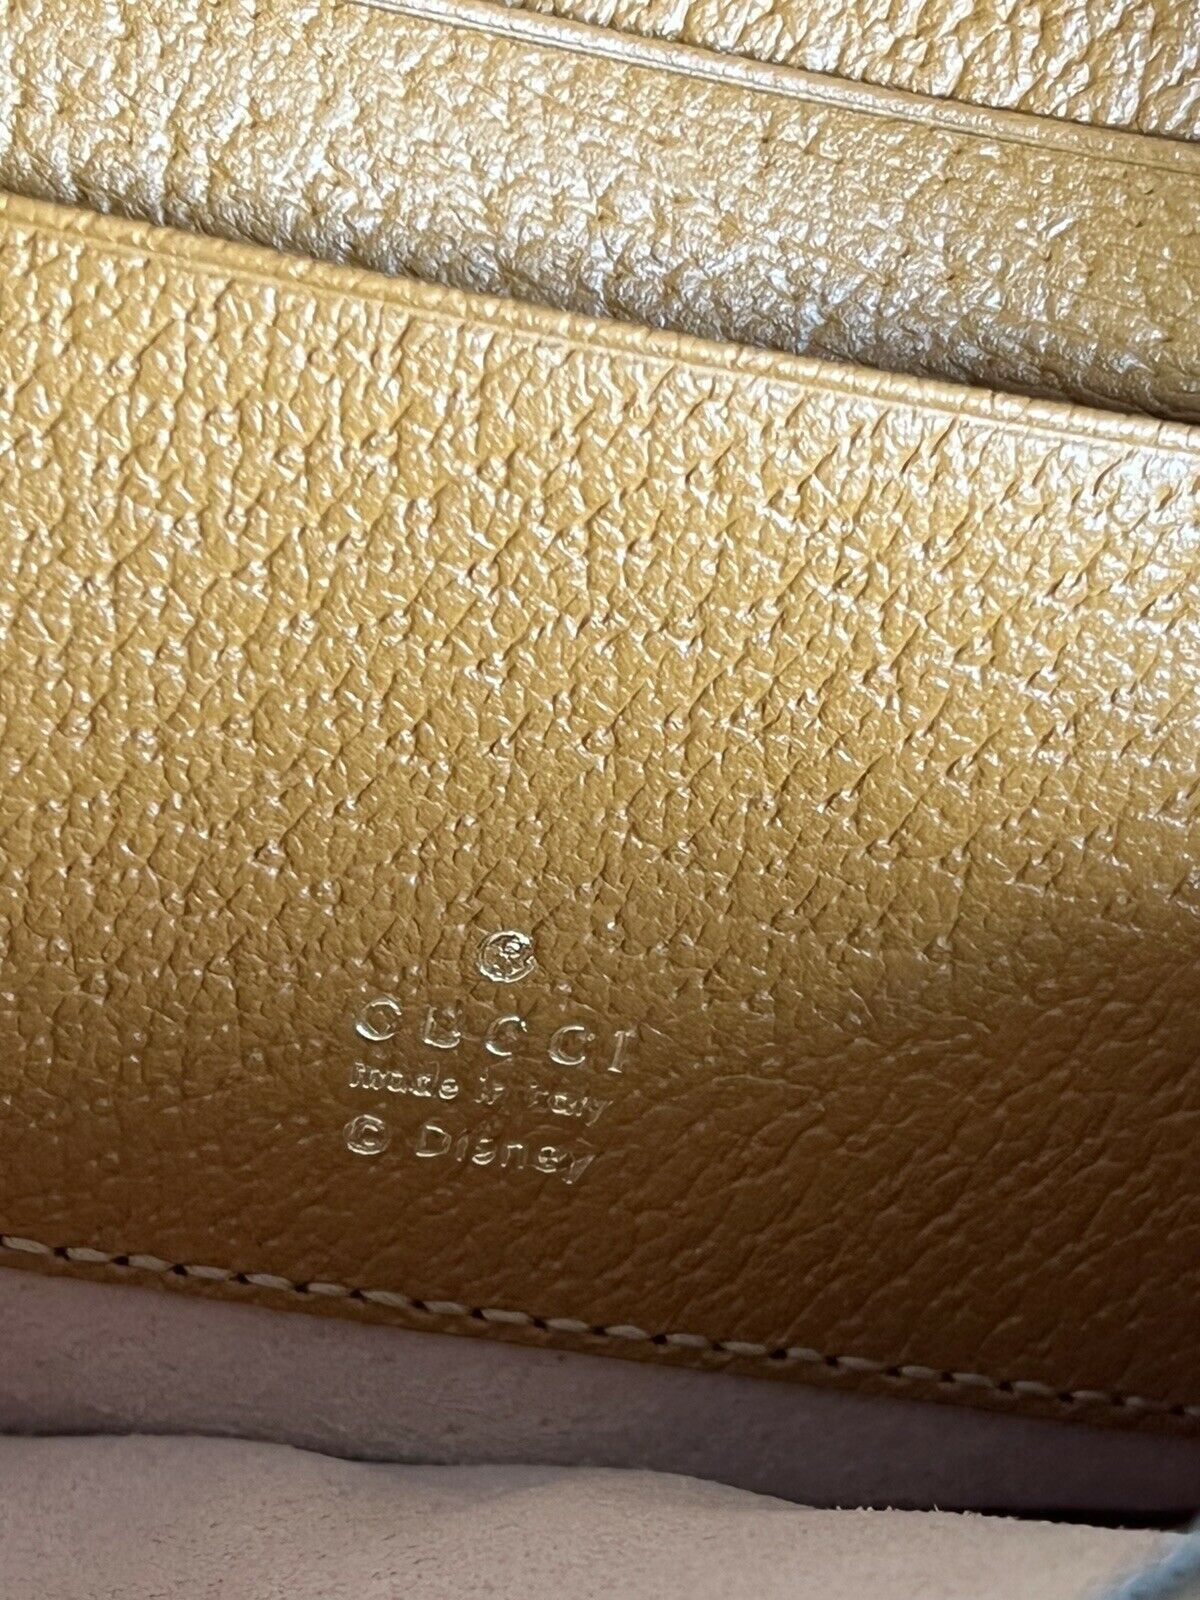 Neu mit Etikett: Gucci Disney Mickey GG Mini Canvas Round Backpack Bag Limited Edition 603730 